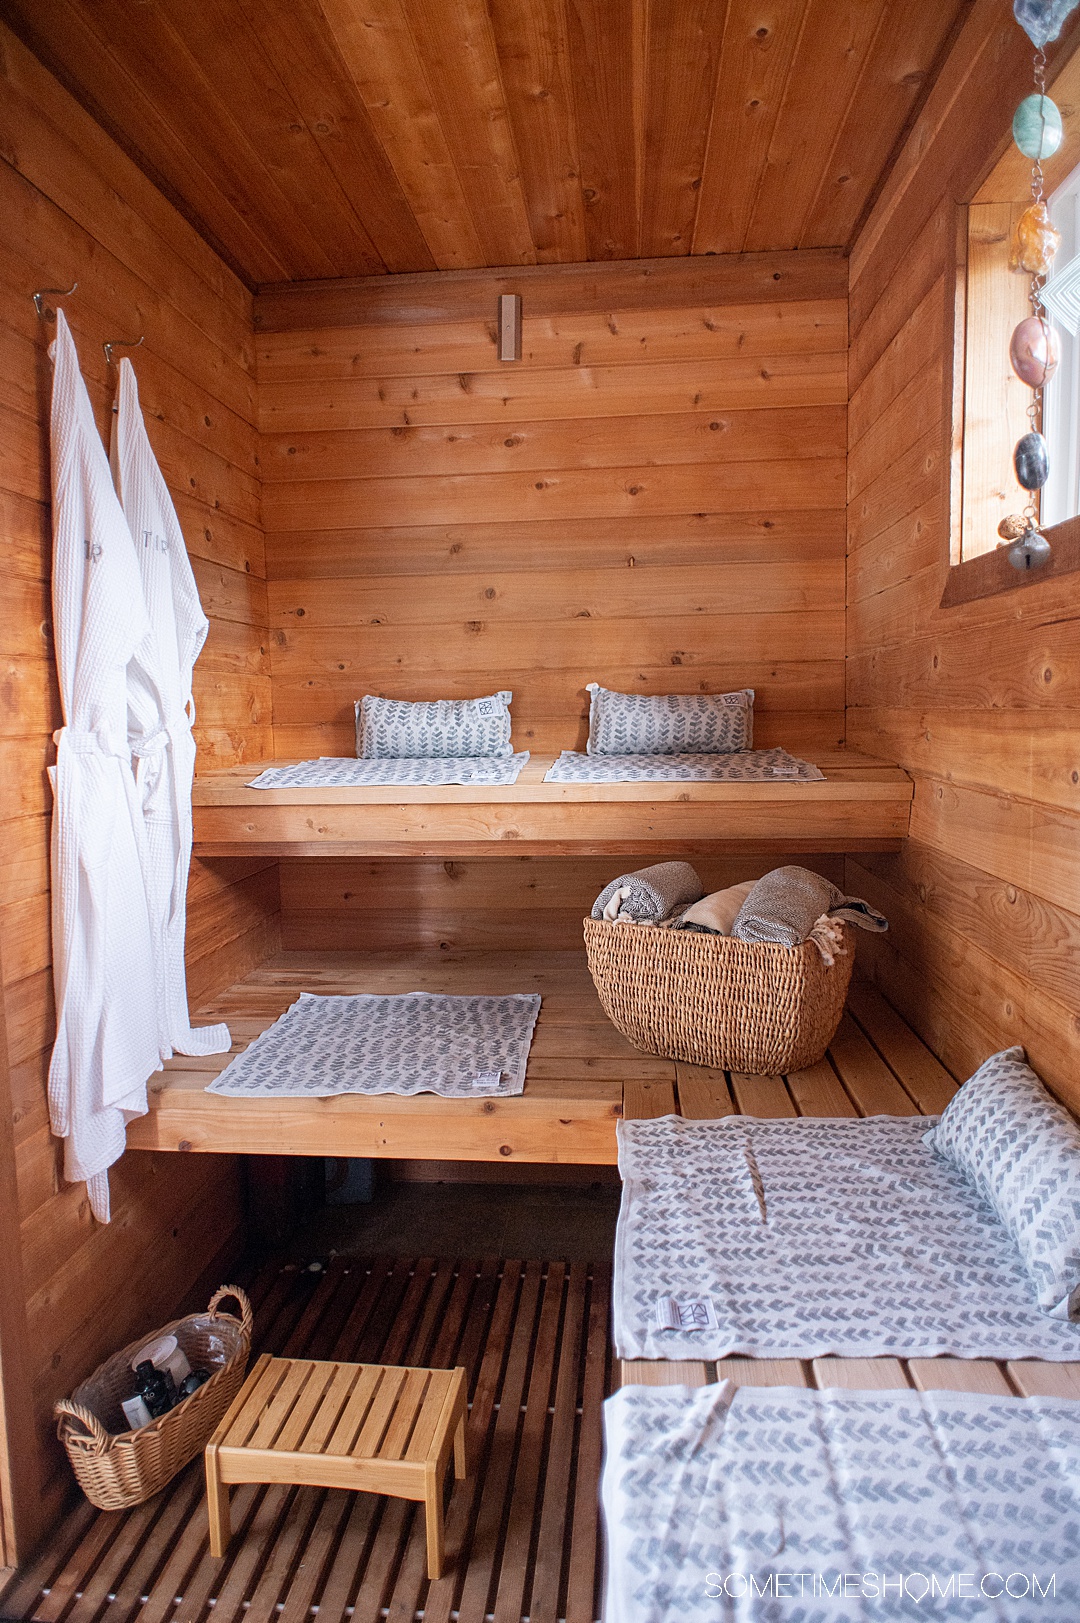 Inside the wood-paneled sauna at Twin Islands Retreat in Alaska.